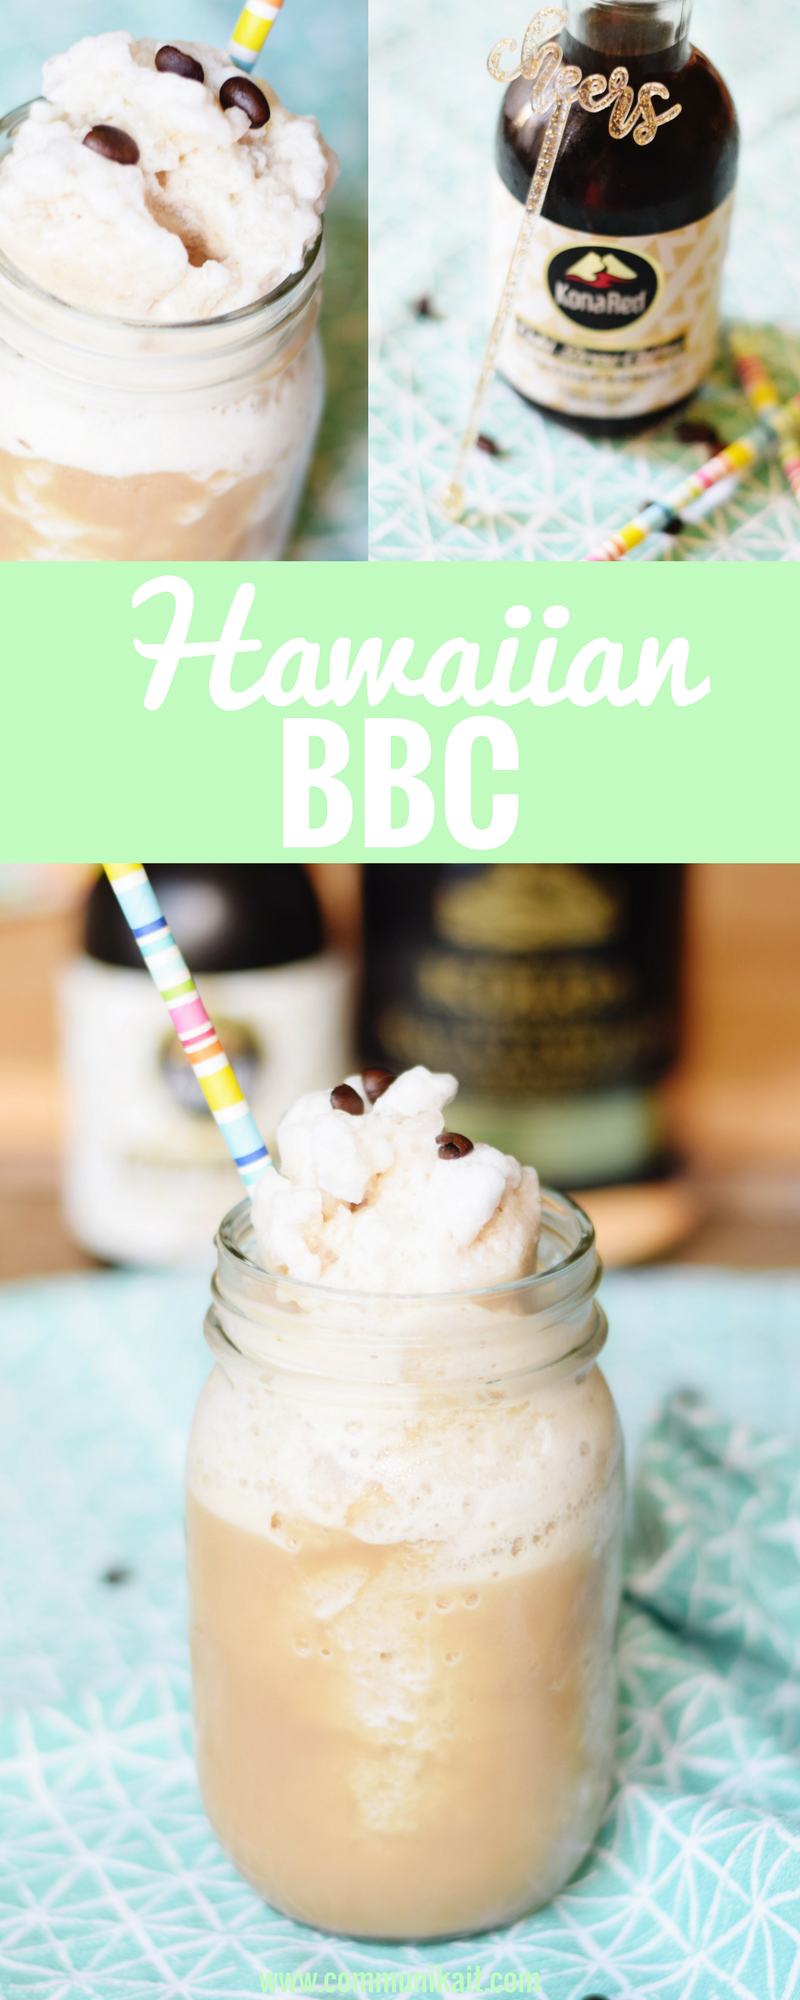 Hawaiian BBC - Tropical Drink Recipe - Summer Cocktail - Easy Frozen Cocktail - Coffee Cocktail - BBC Recipe - Bailey's Cocktail Recipe - Easy Drinks For Party - Communikait by Kait Hanson